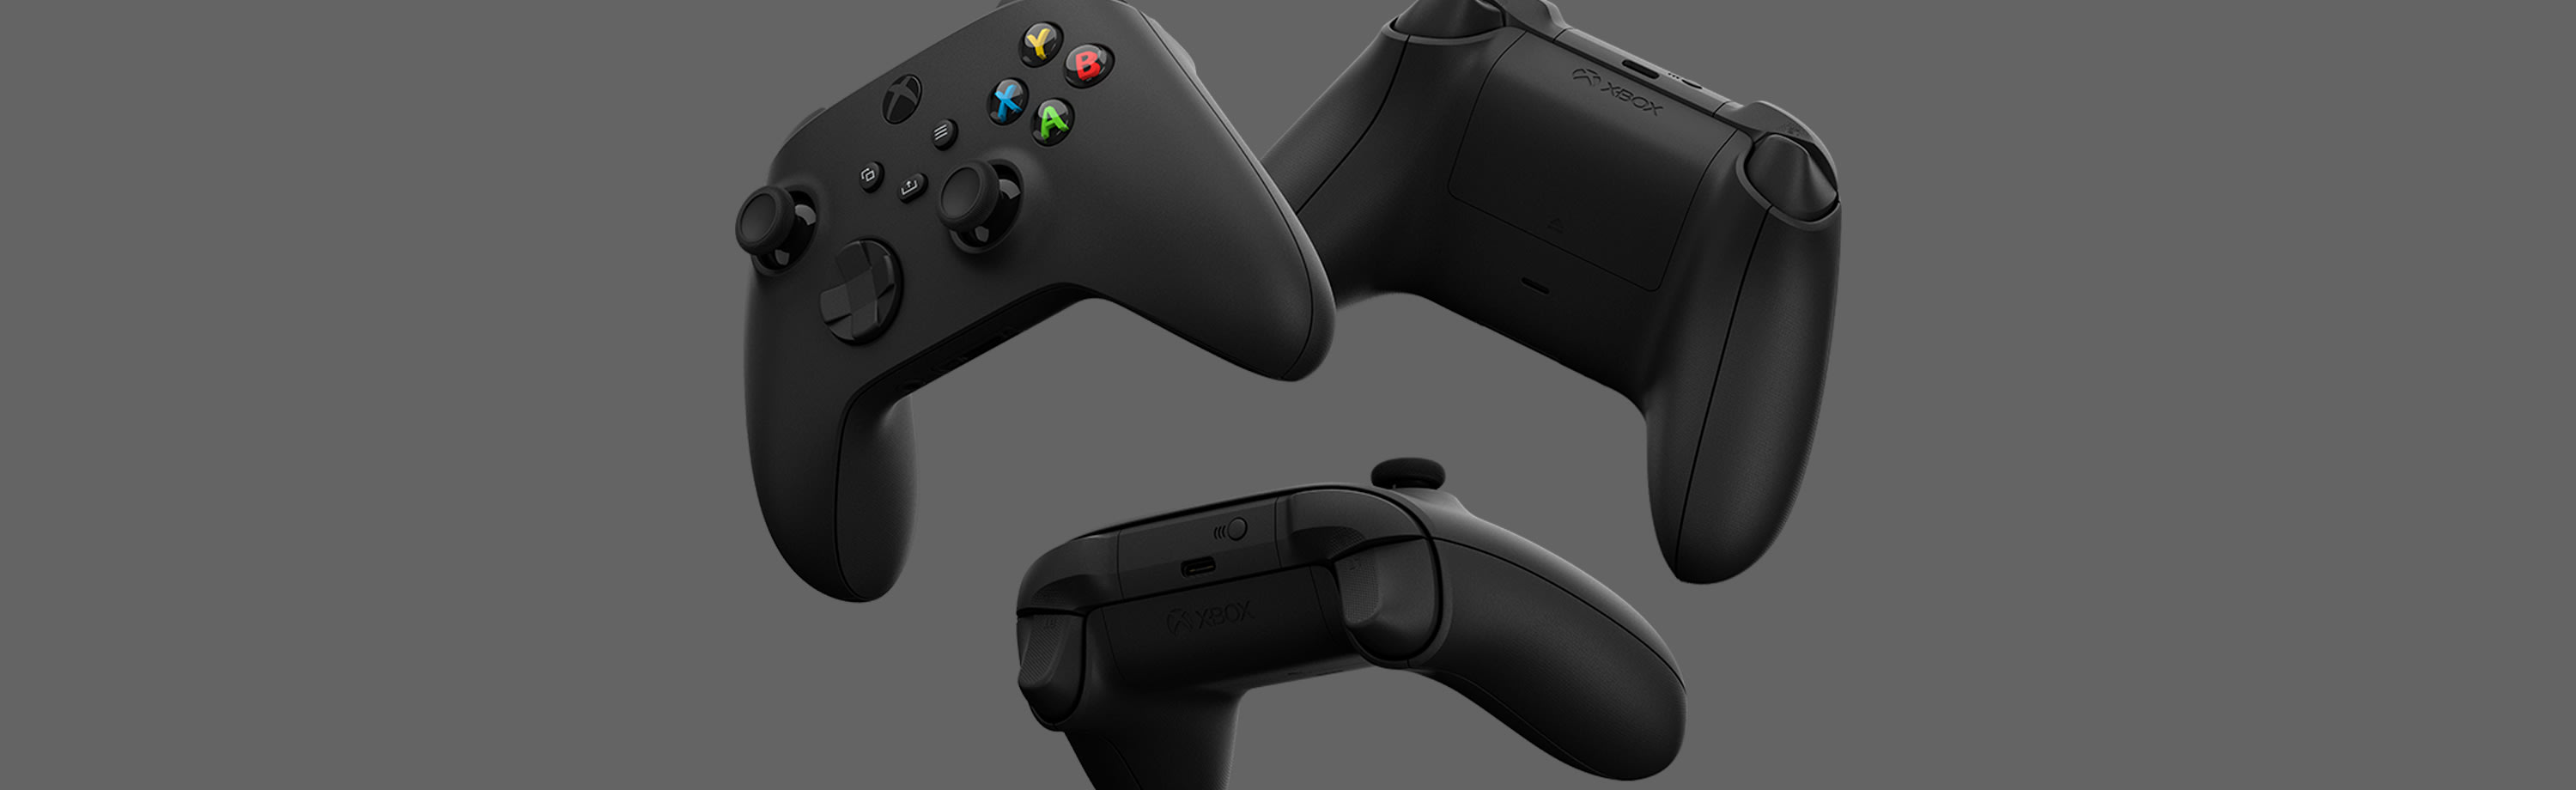 New Black Xbox Wireless Controller